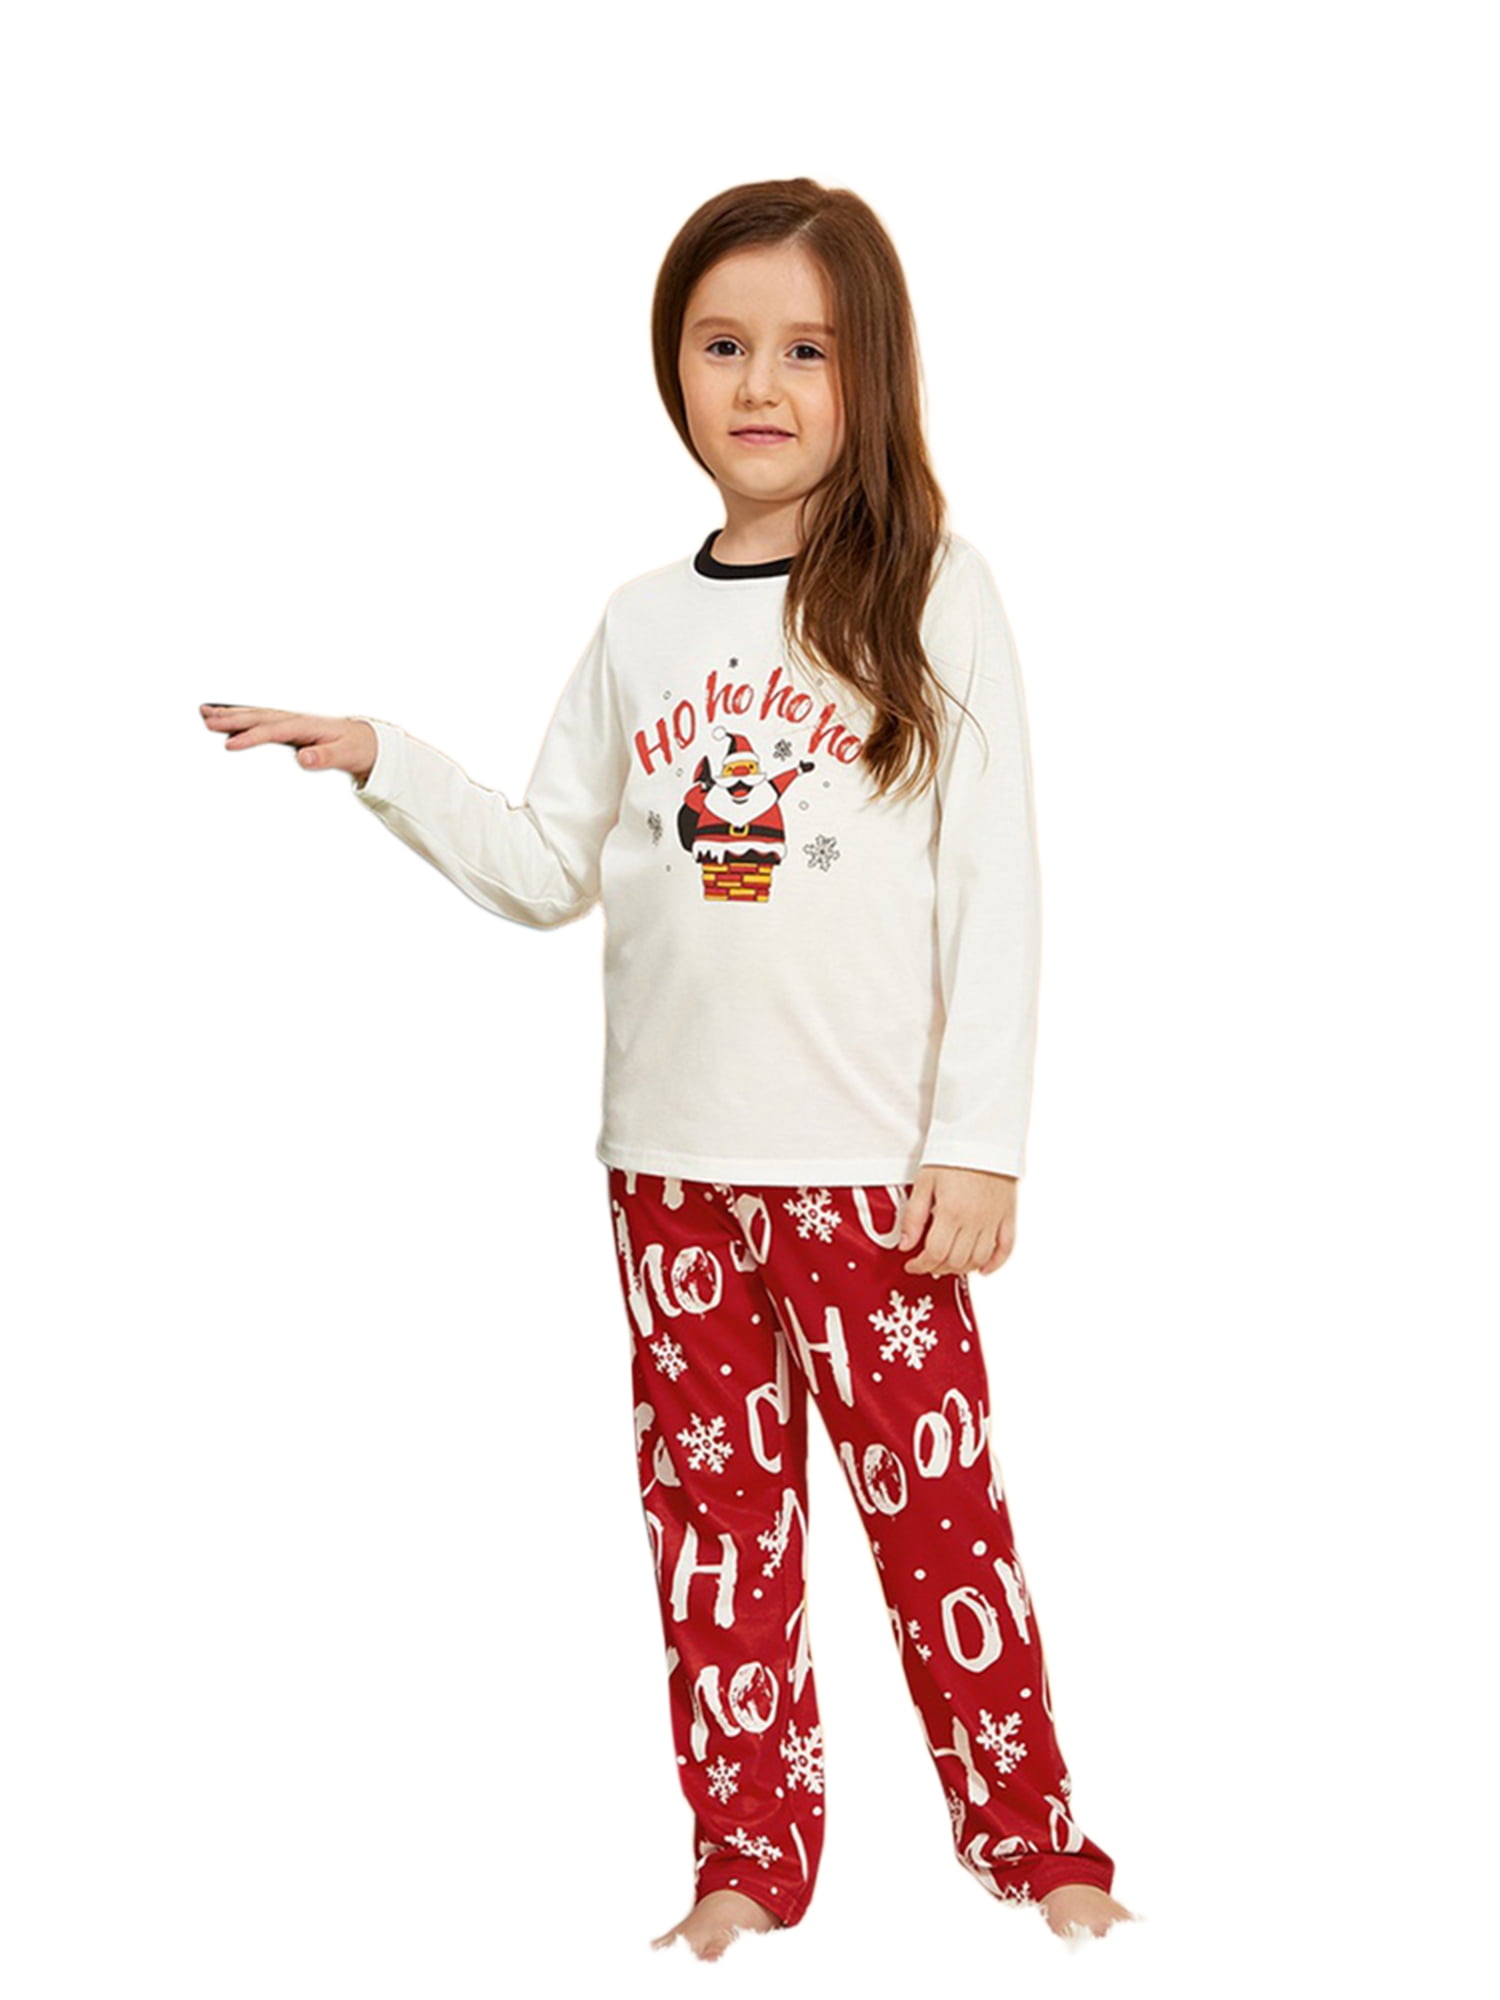 NEW Komar Kids 4t Christmas pajamas red green white Santa 